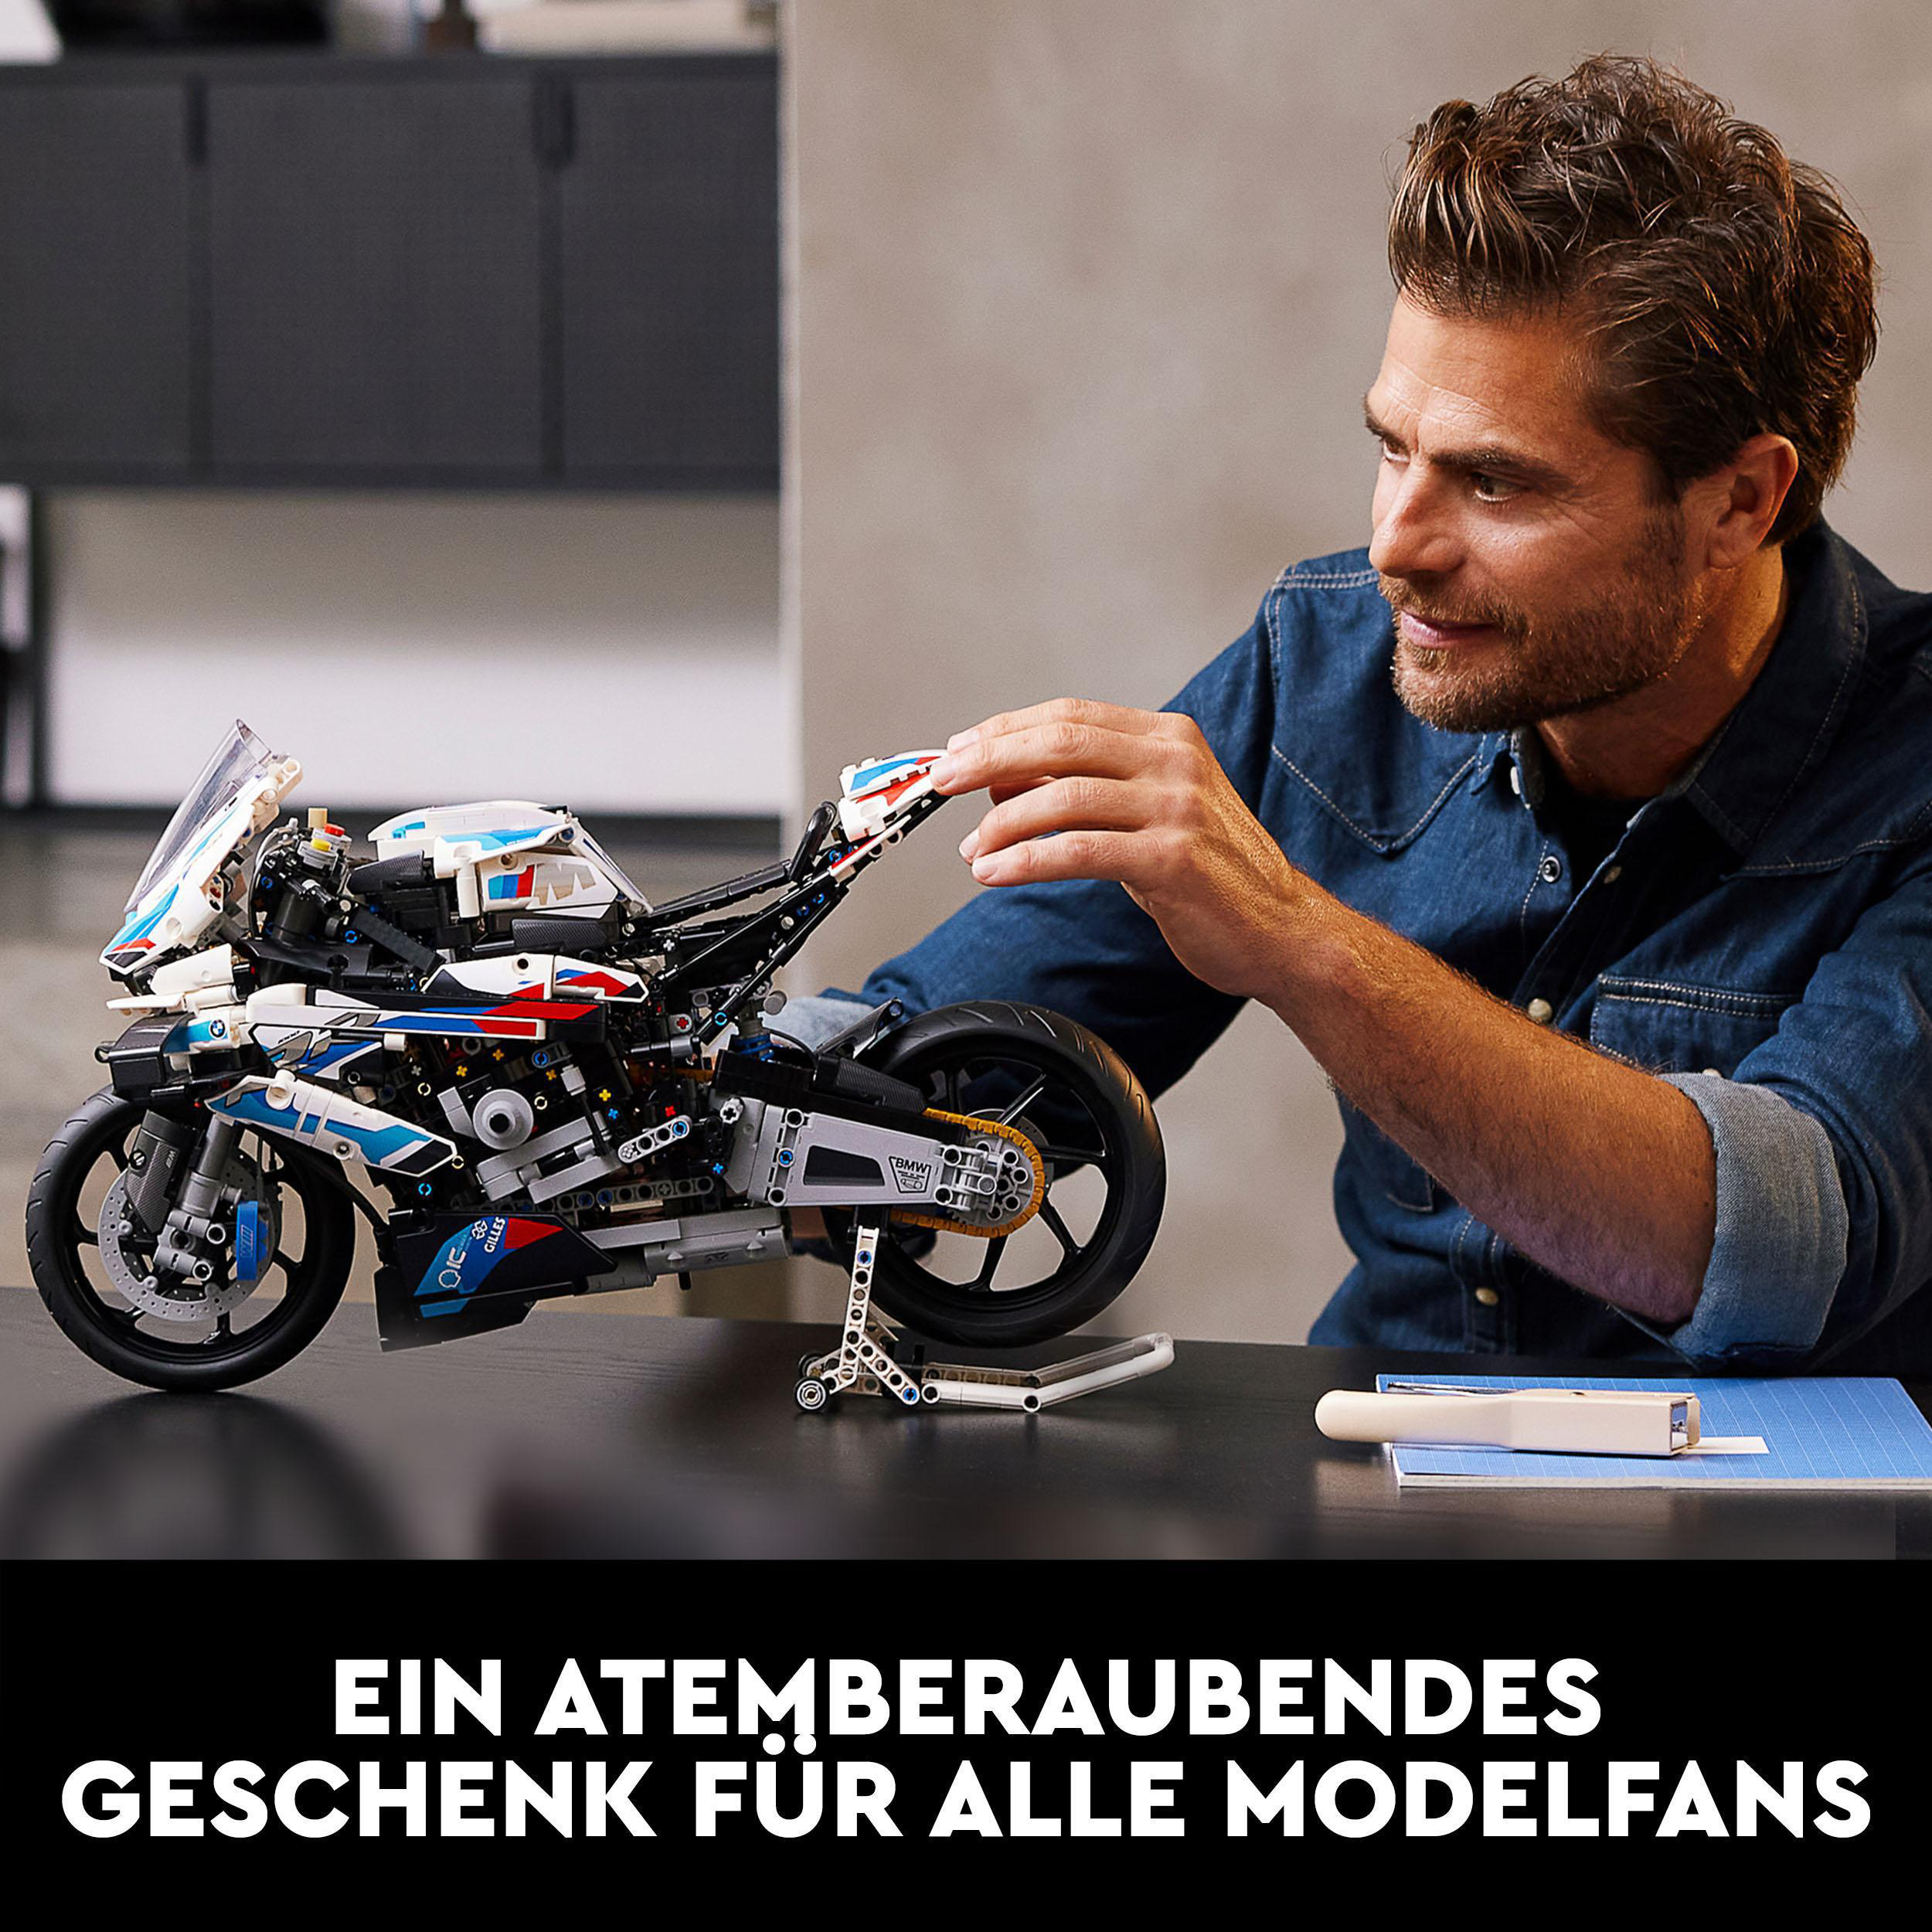 LEGO Technic 42130 BMW RR Bausatz, Mehrfarbig 1000 M